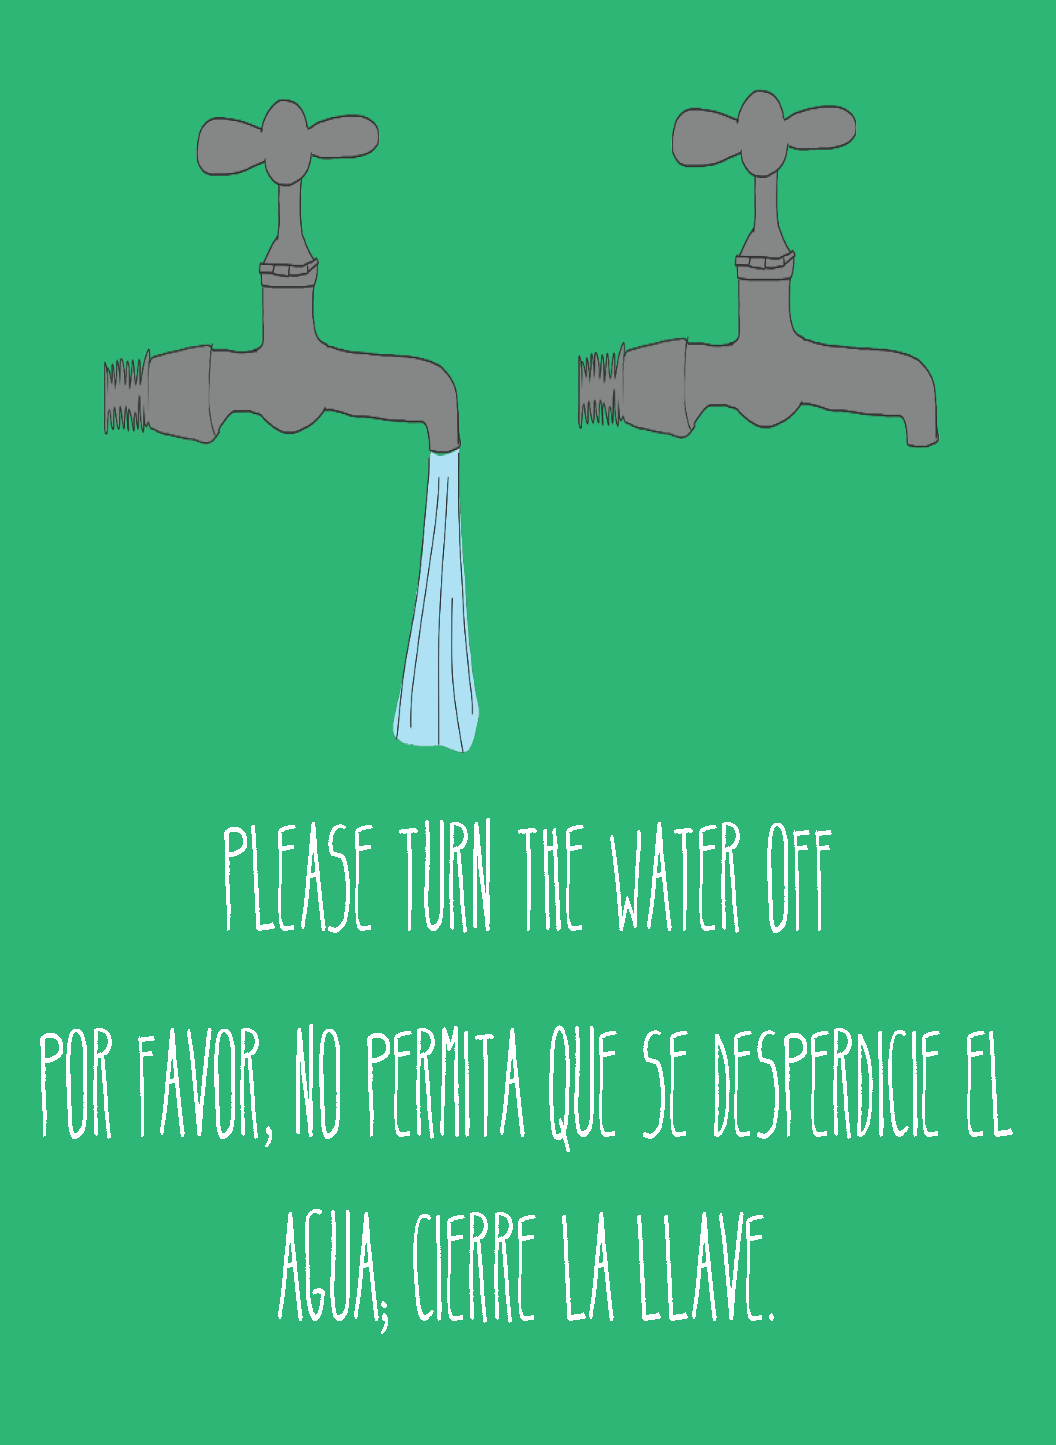 Turn Off Water Water Shut Off Reminder